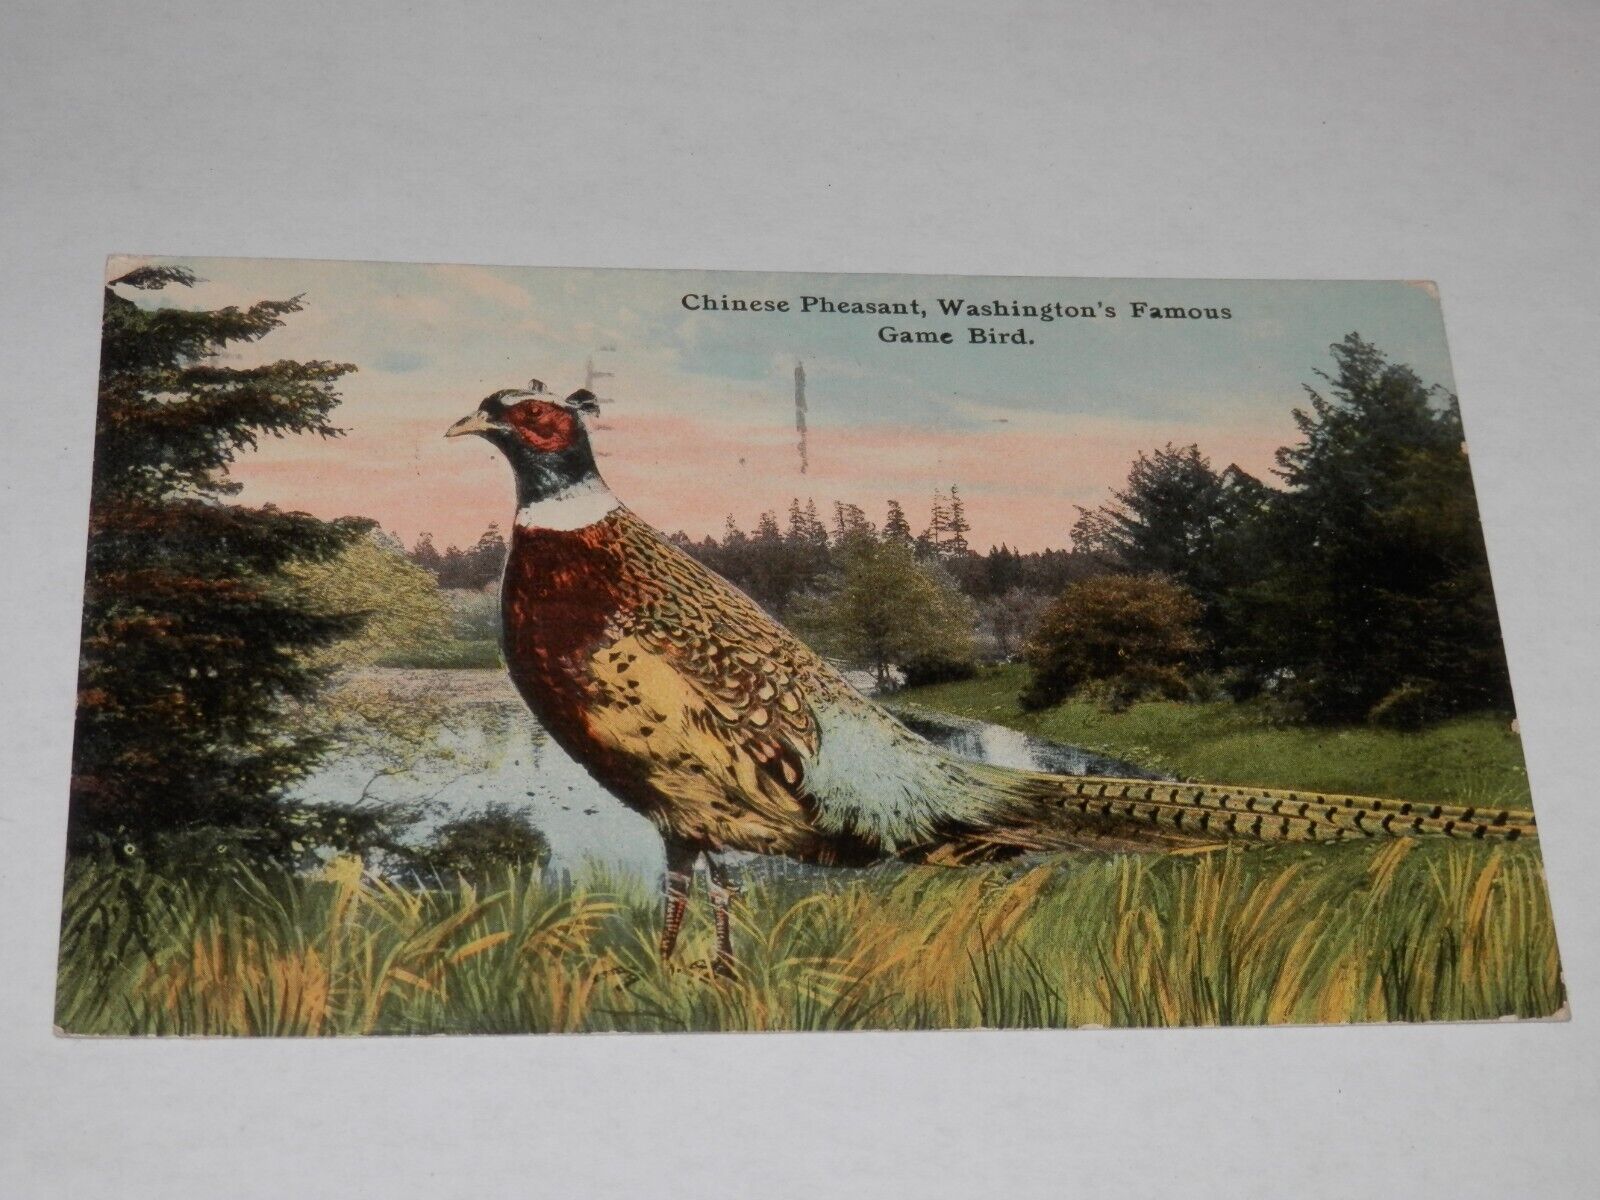 SEATTLE WASHINGTON - 1913 POSTCARD - CHINESE PHEASANT - GAME BIRD of WASHINGTON